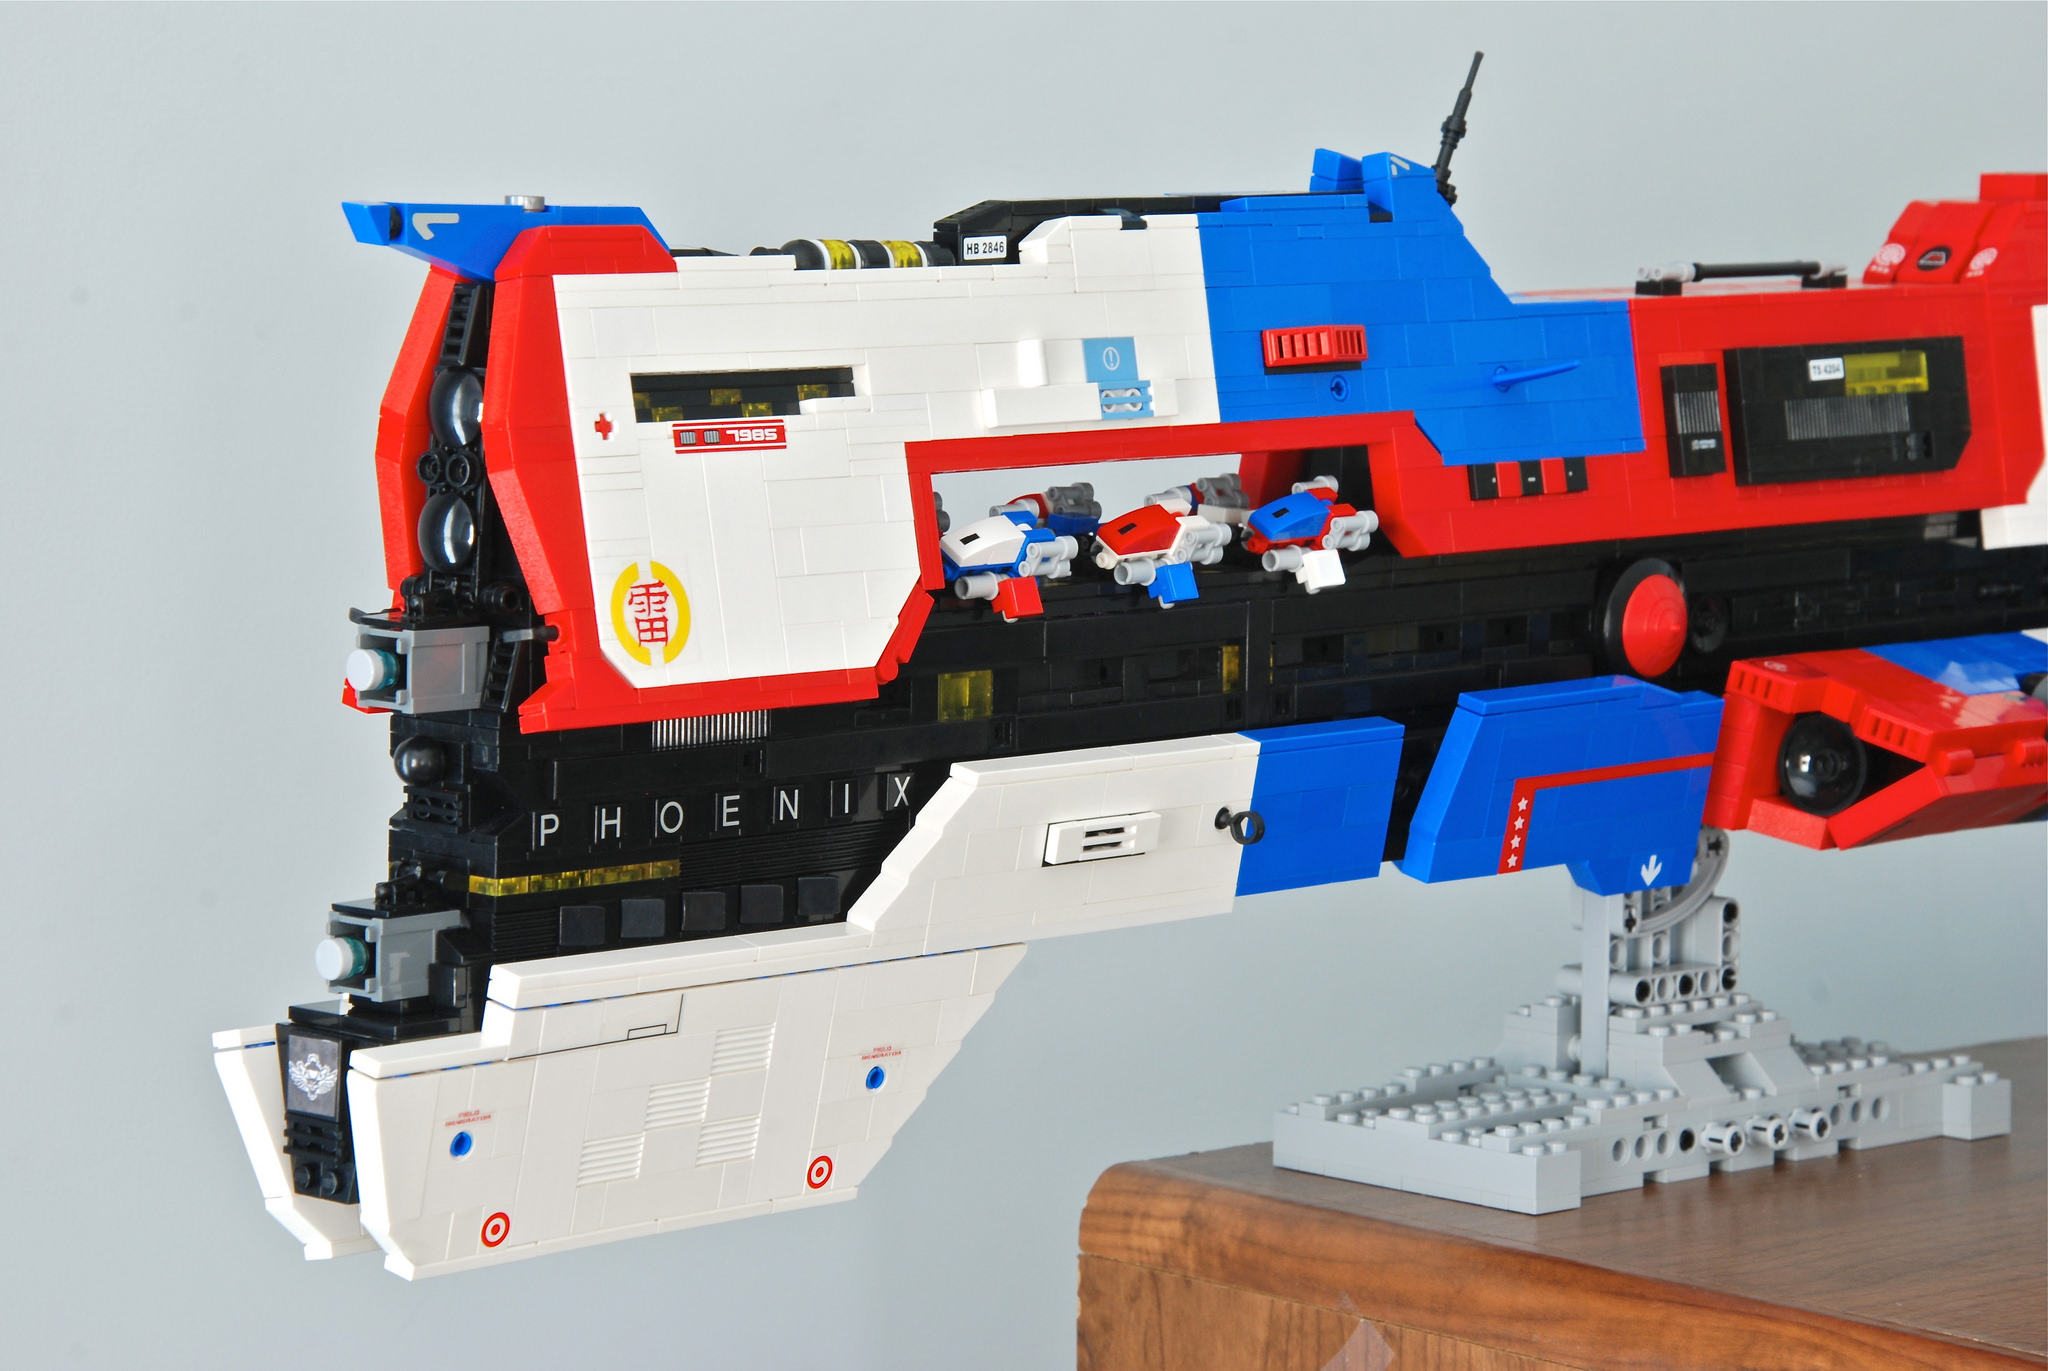 LEGO Homeworld Ships Are Works Of Art